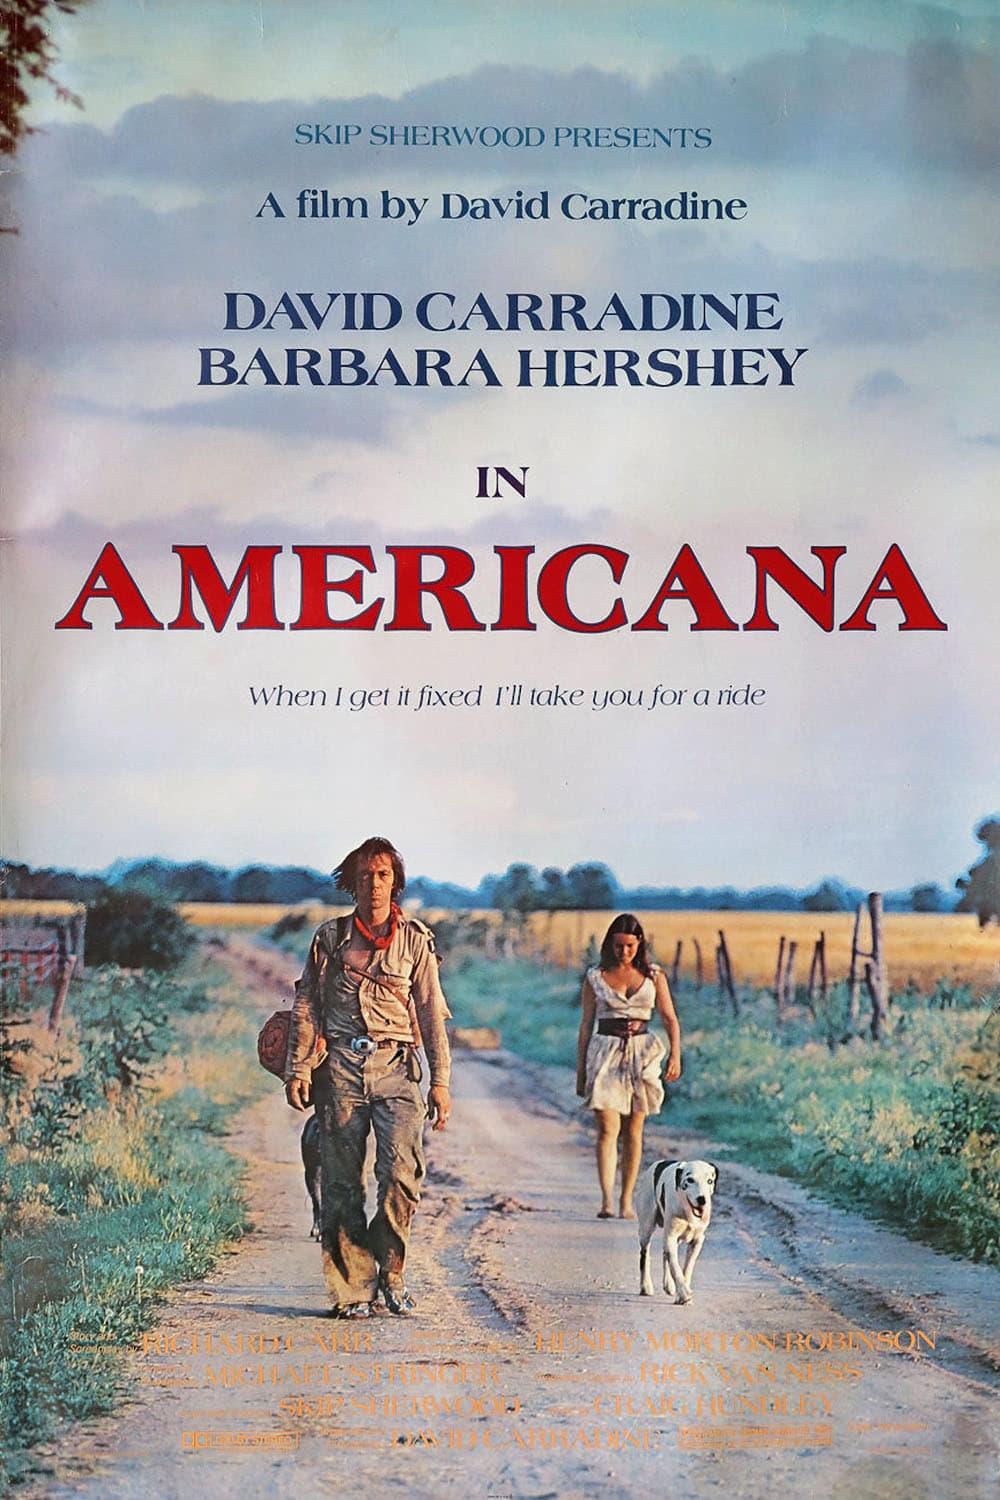 Americana poster